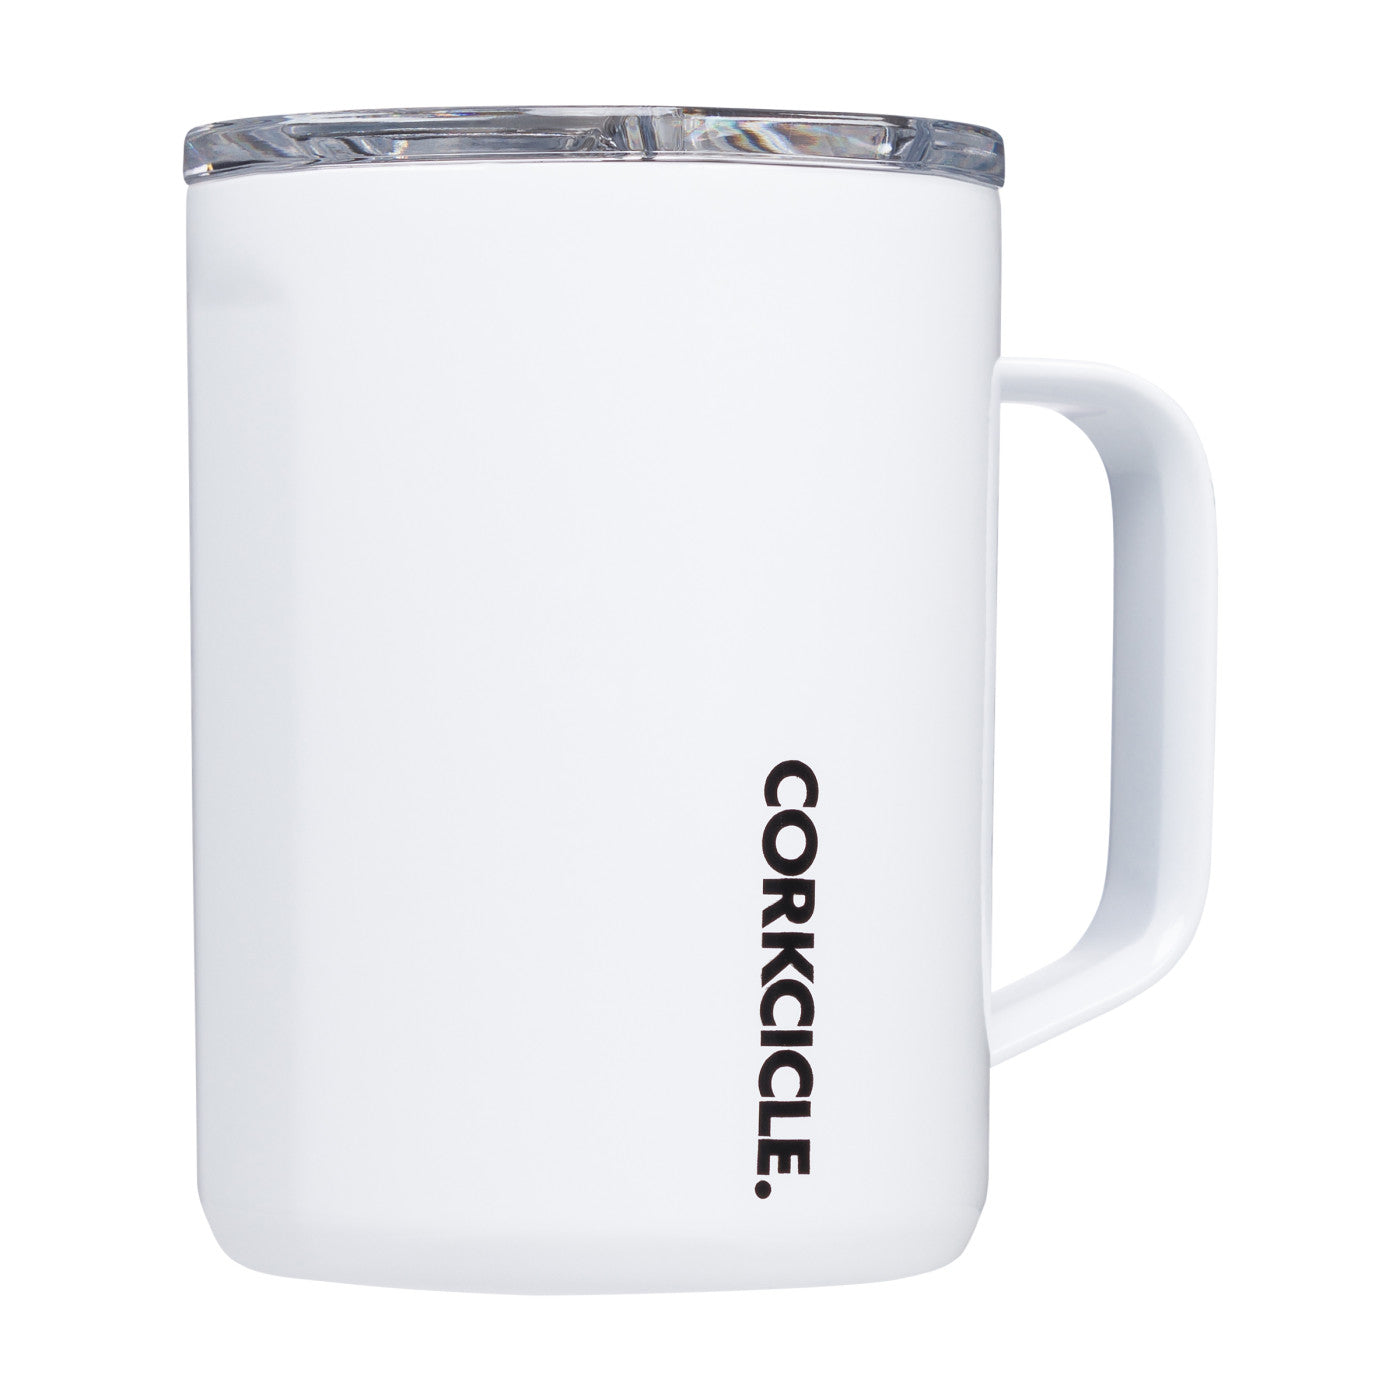 Corkcicle Coffee Mug 16 Oz., White